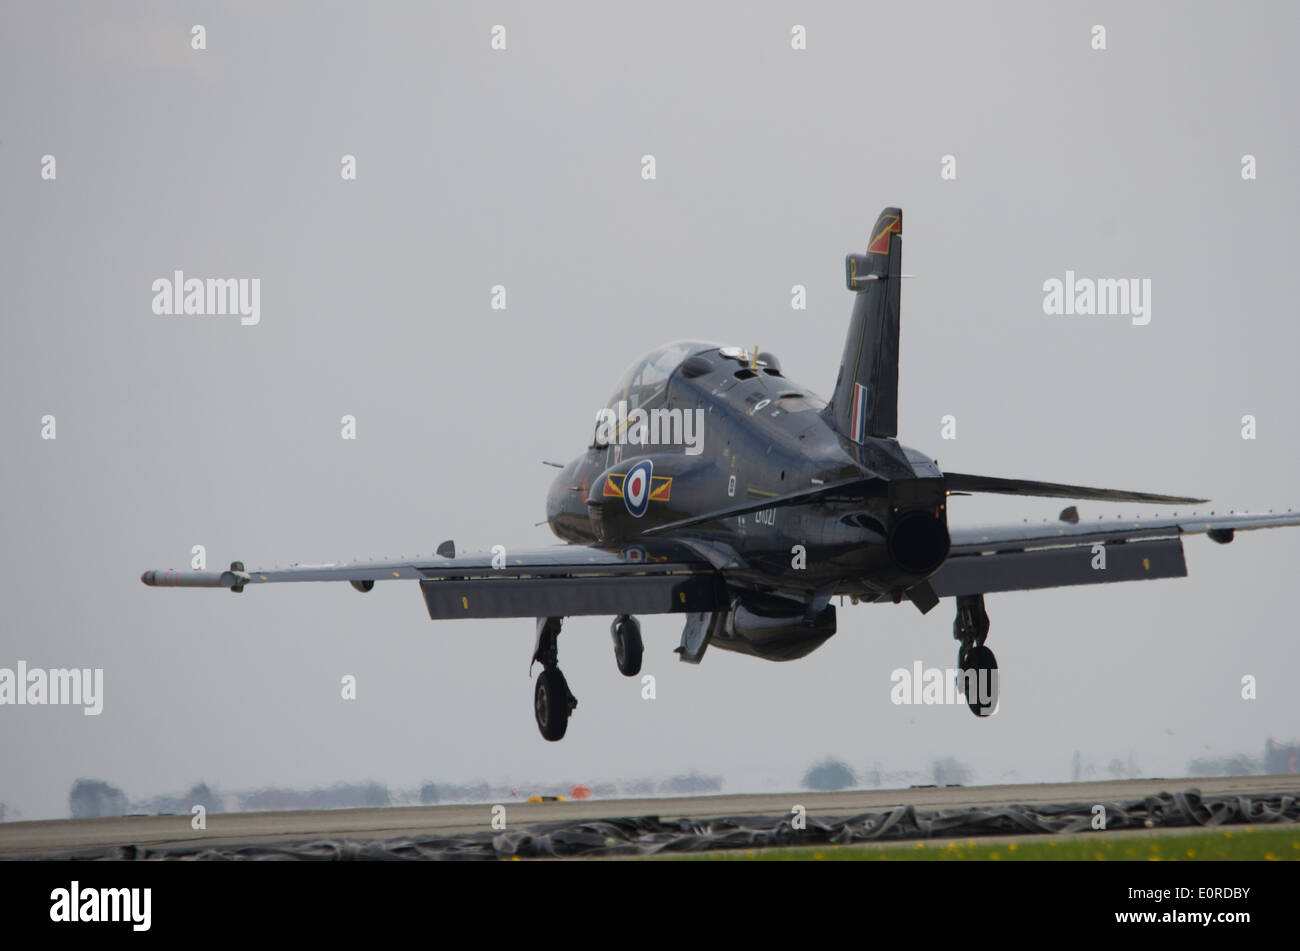 A Hawk landing at RAF Valley. Stock Photo